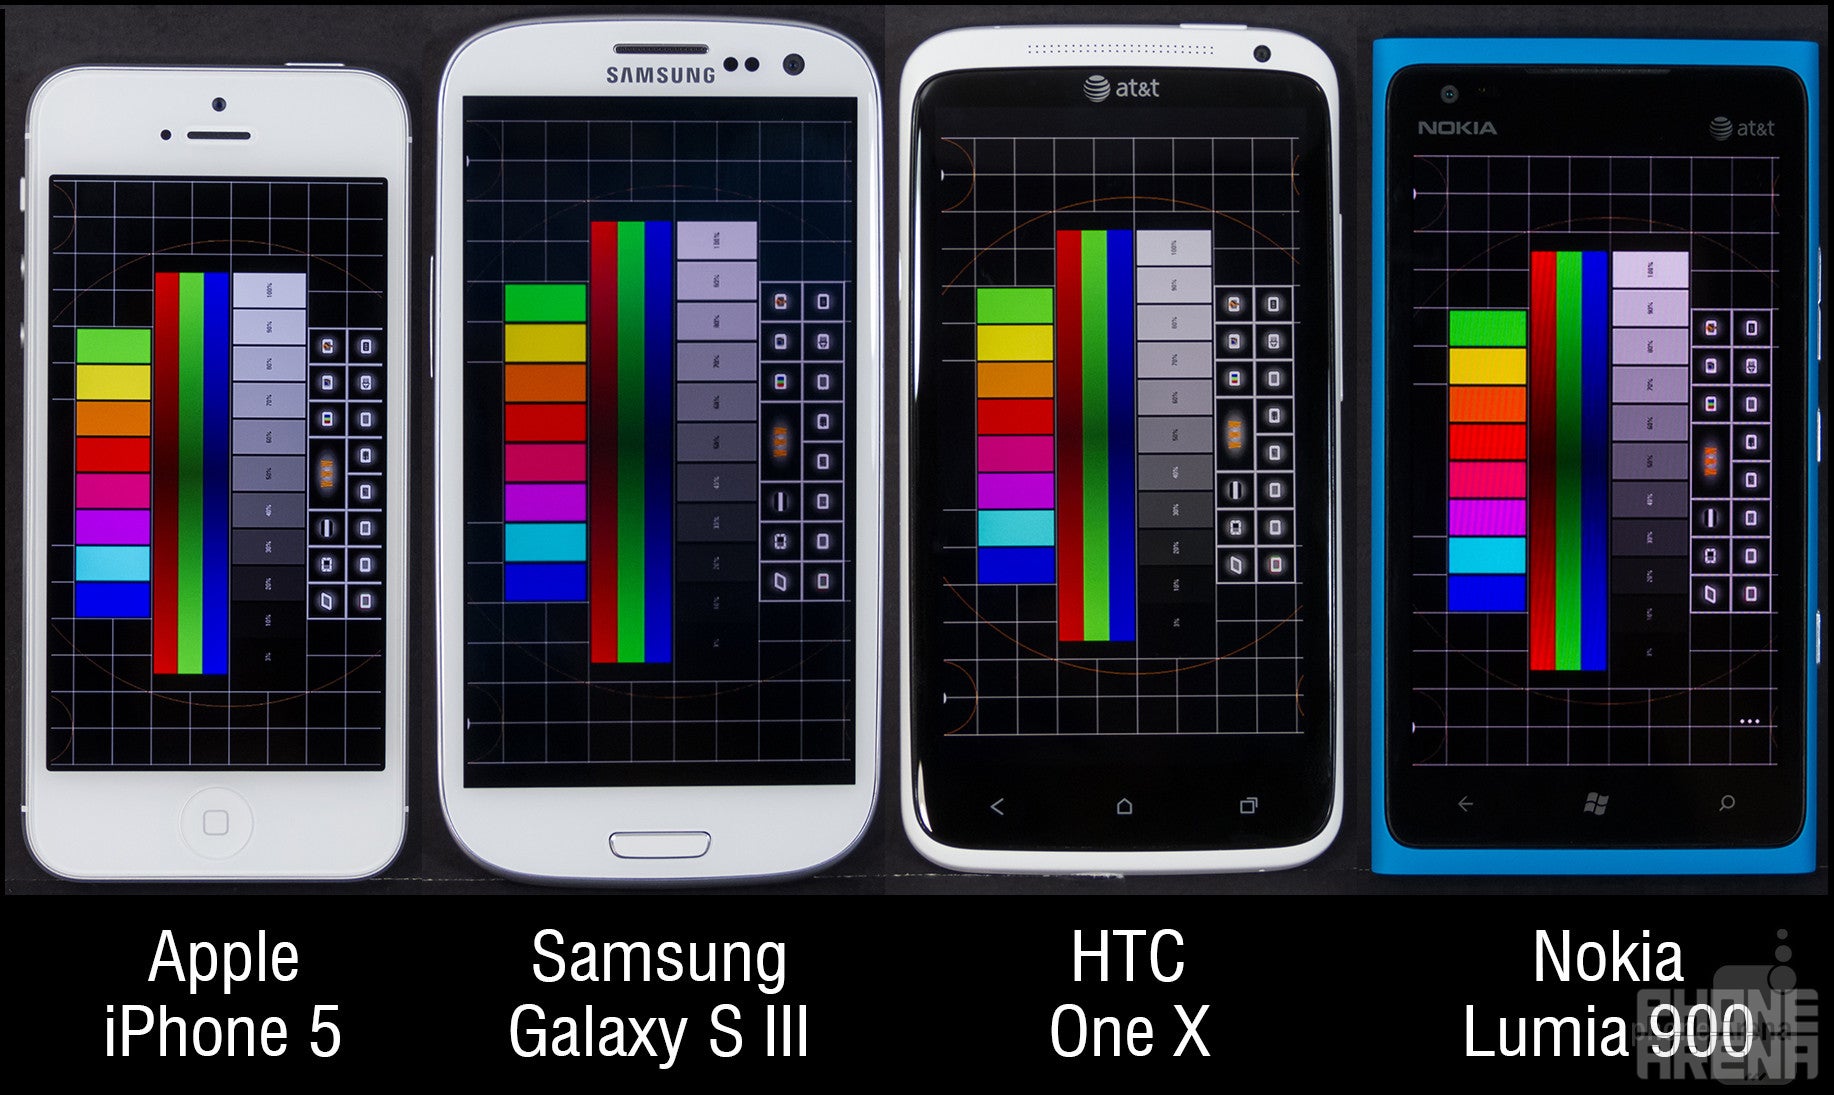 Display Comparison: Apple iPhone 5 vs Samsung Galaxy S III vs HTC One X vs Nokia Lumia 900